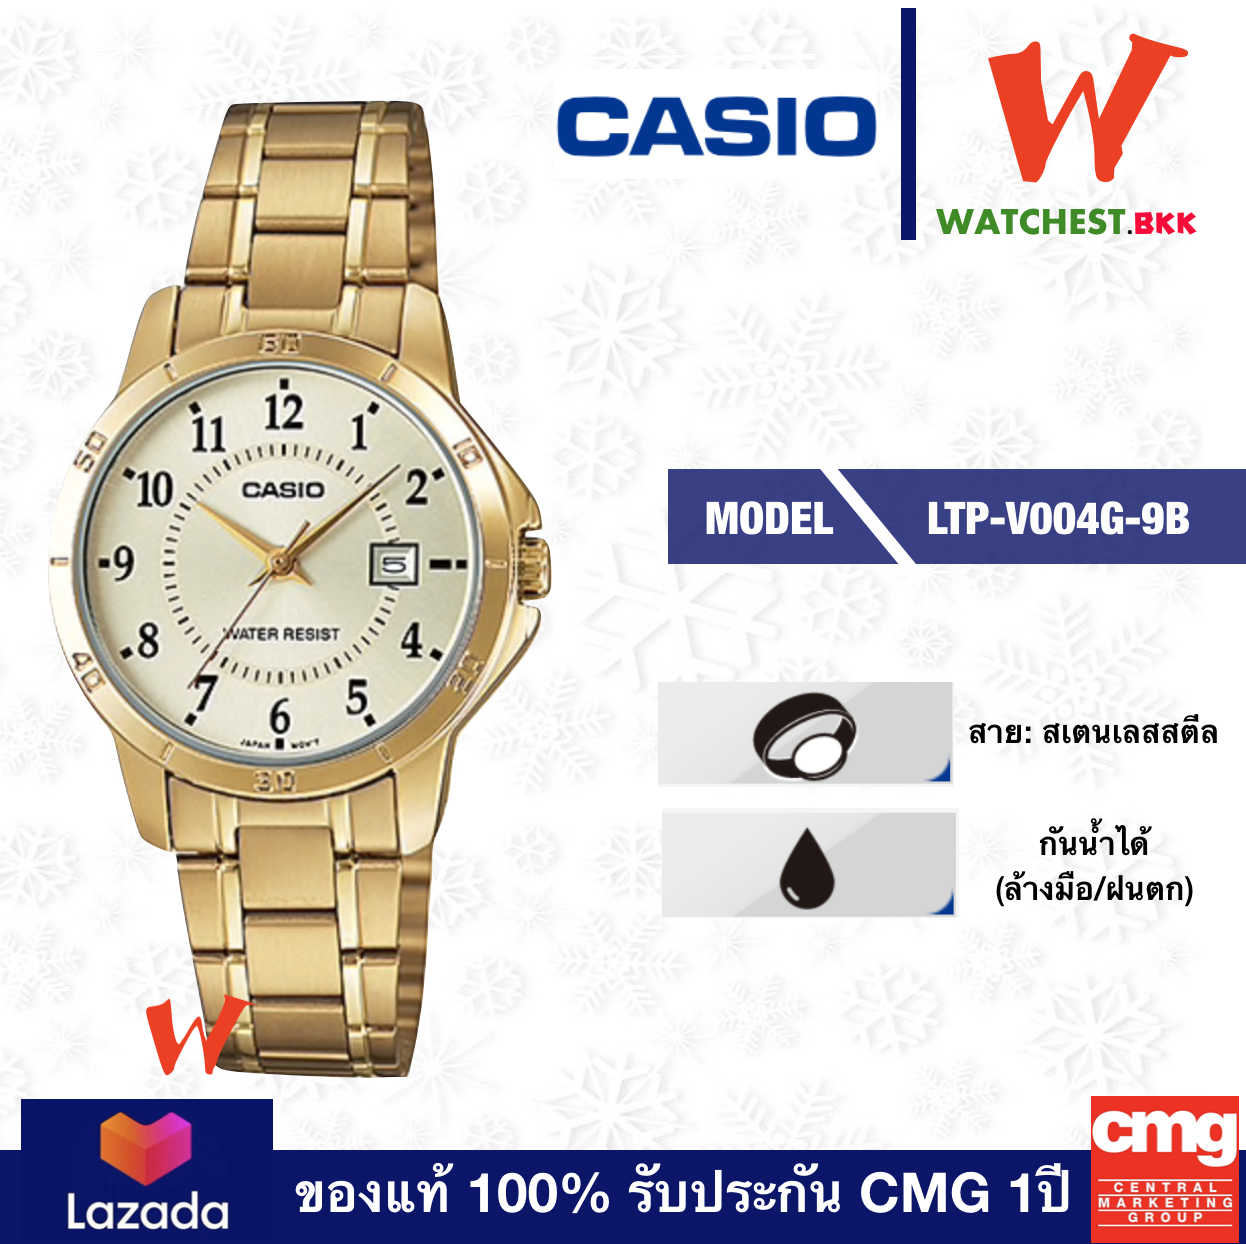 casio นาฬิกาข้อมือผู้หญิง สายสเตนเลสทอง รุ่น LTP-V004G-9B คาสิโอ้ สายเหล็ก ตัวล็อกบานพับ (watchestbkk คาสิโอ แท้ ของแท้100% ประกัน CMG)